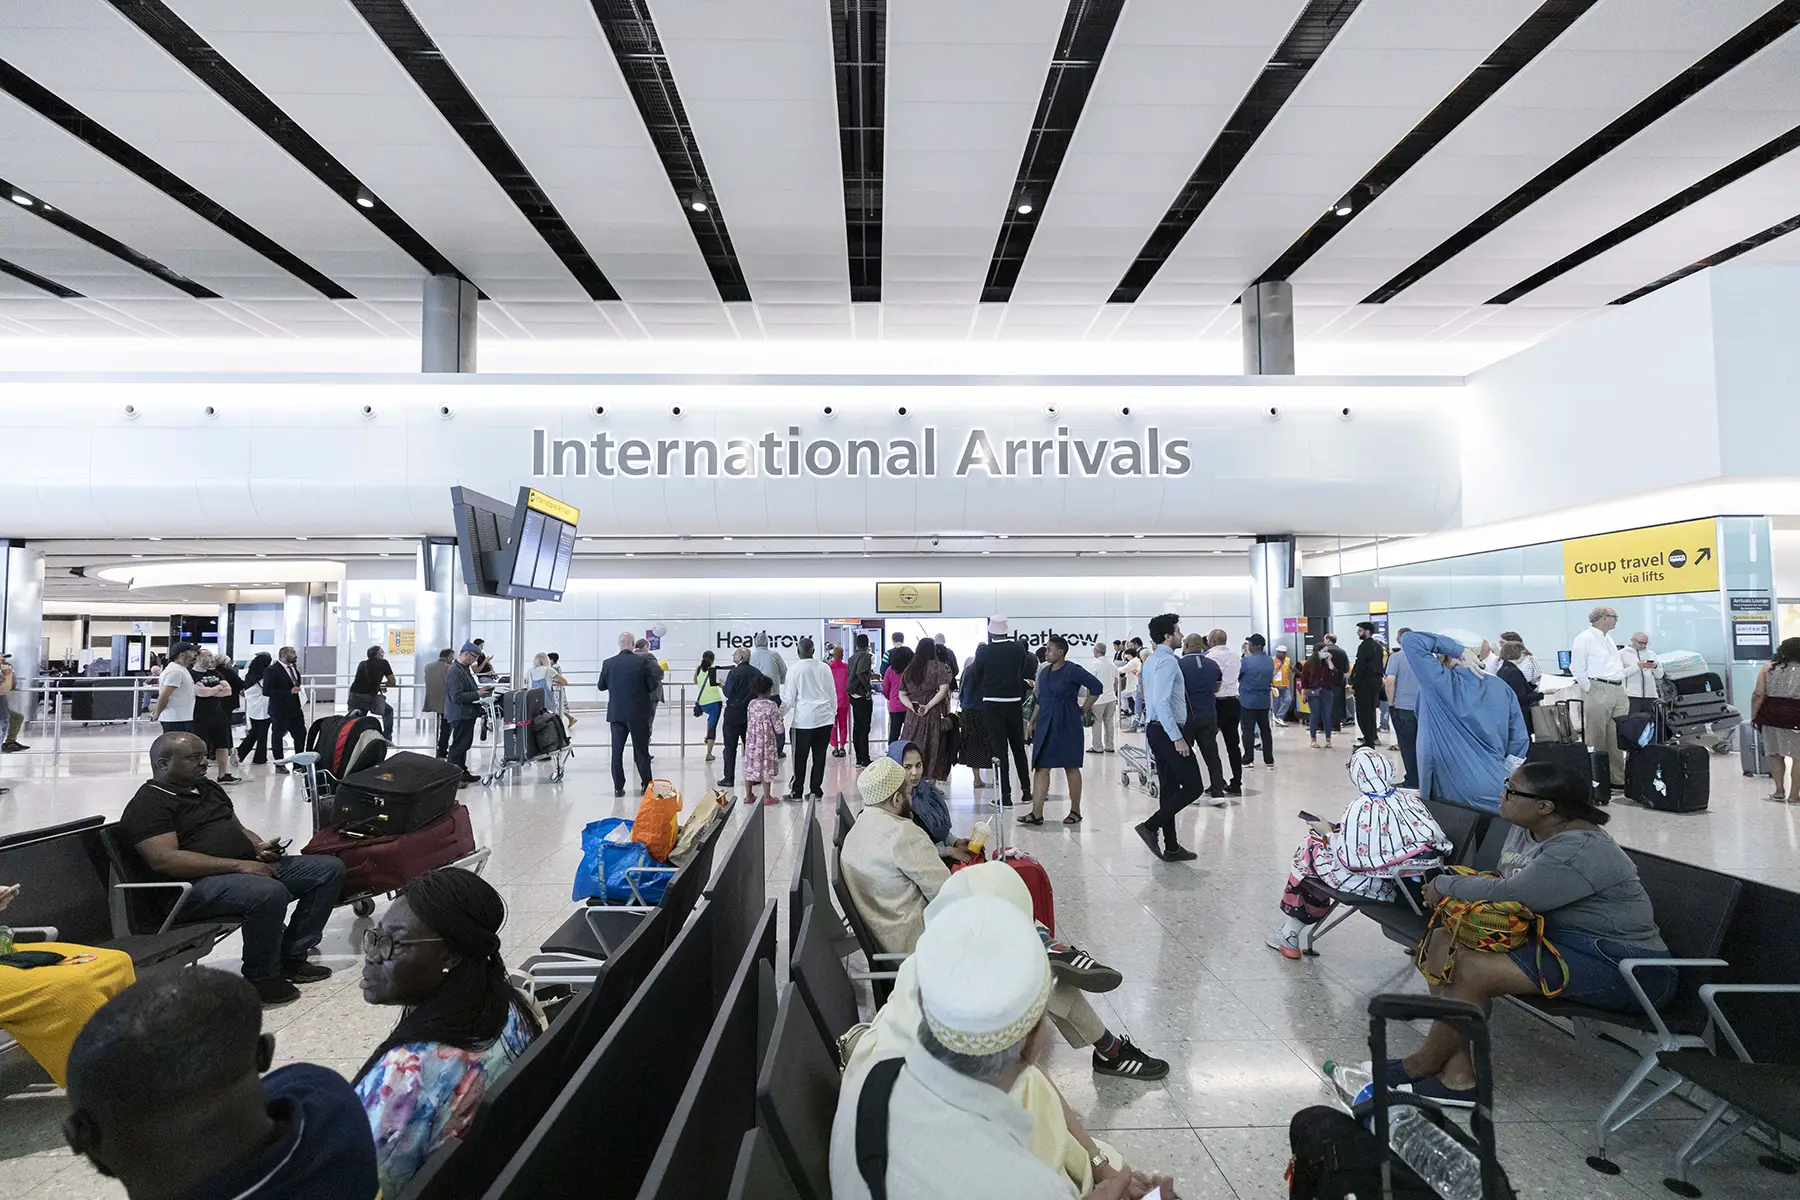 International arrivals area at London Heathrow